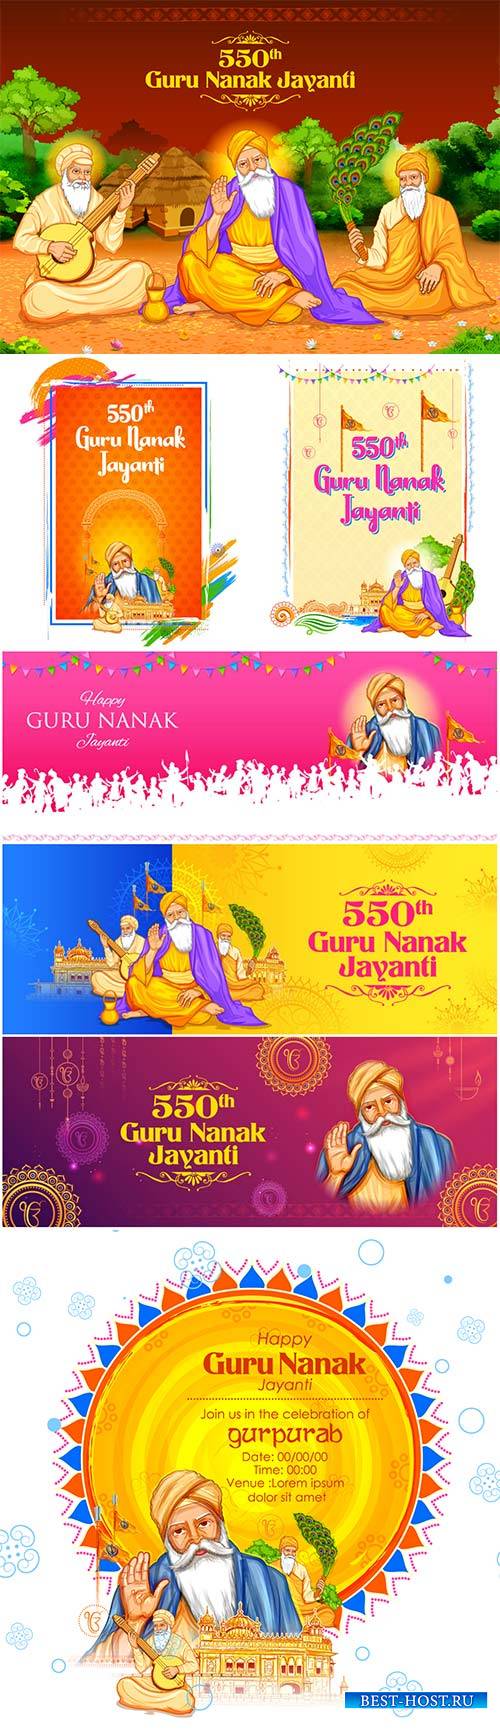 Happy Gurpurab, Guru Nanak Jayanti festival of Sikh celebration